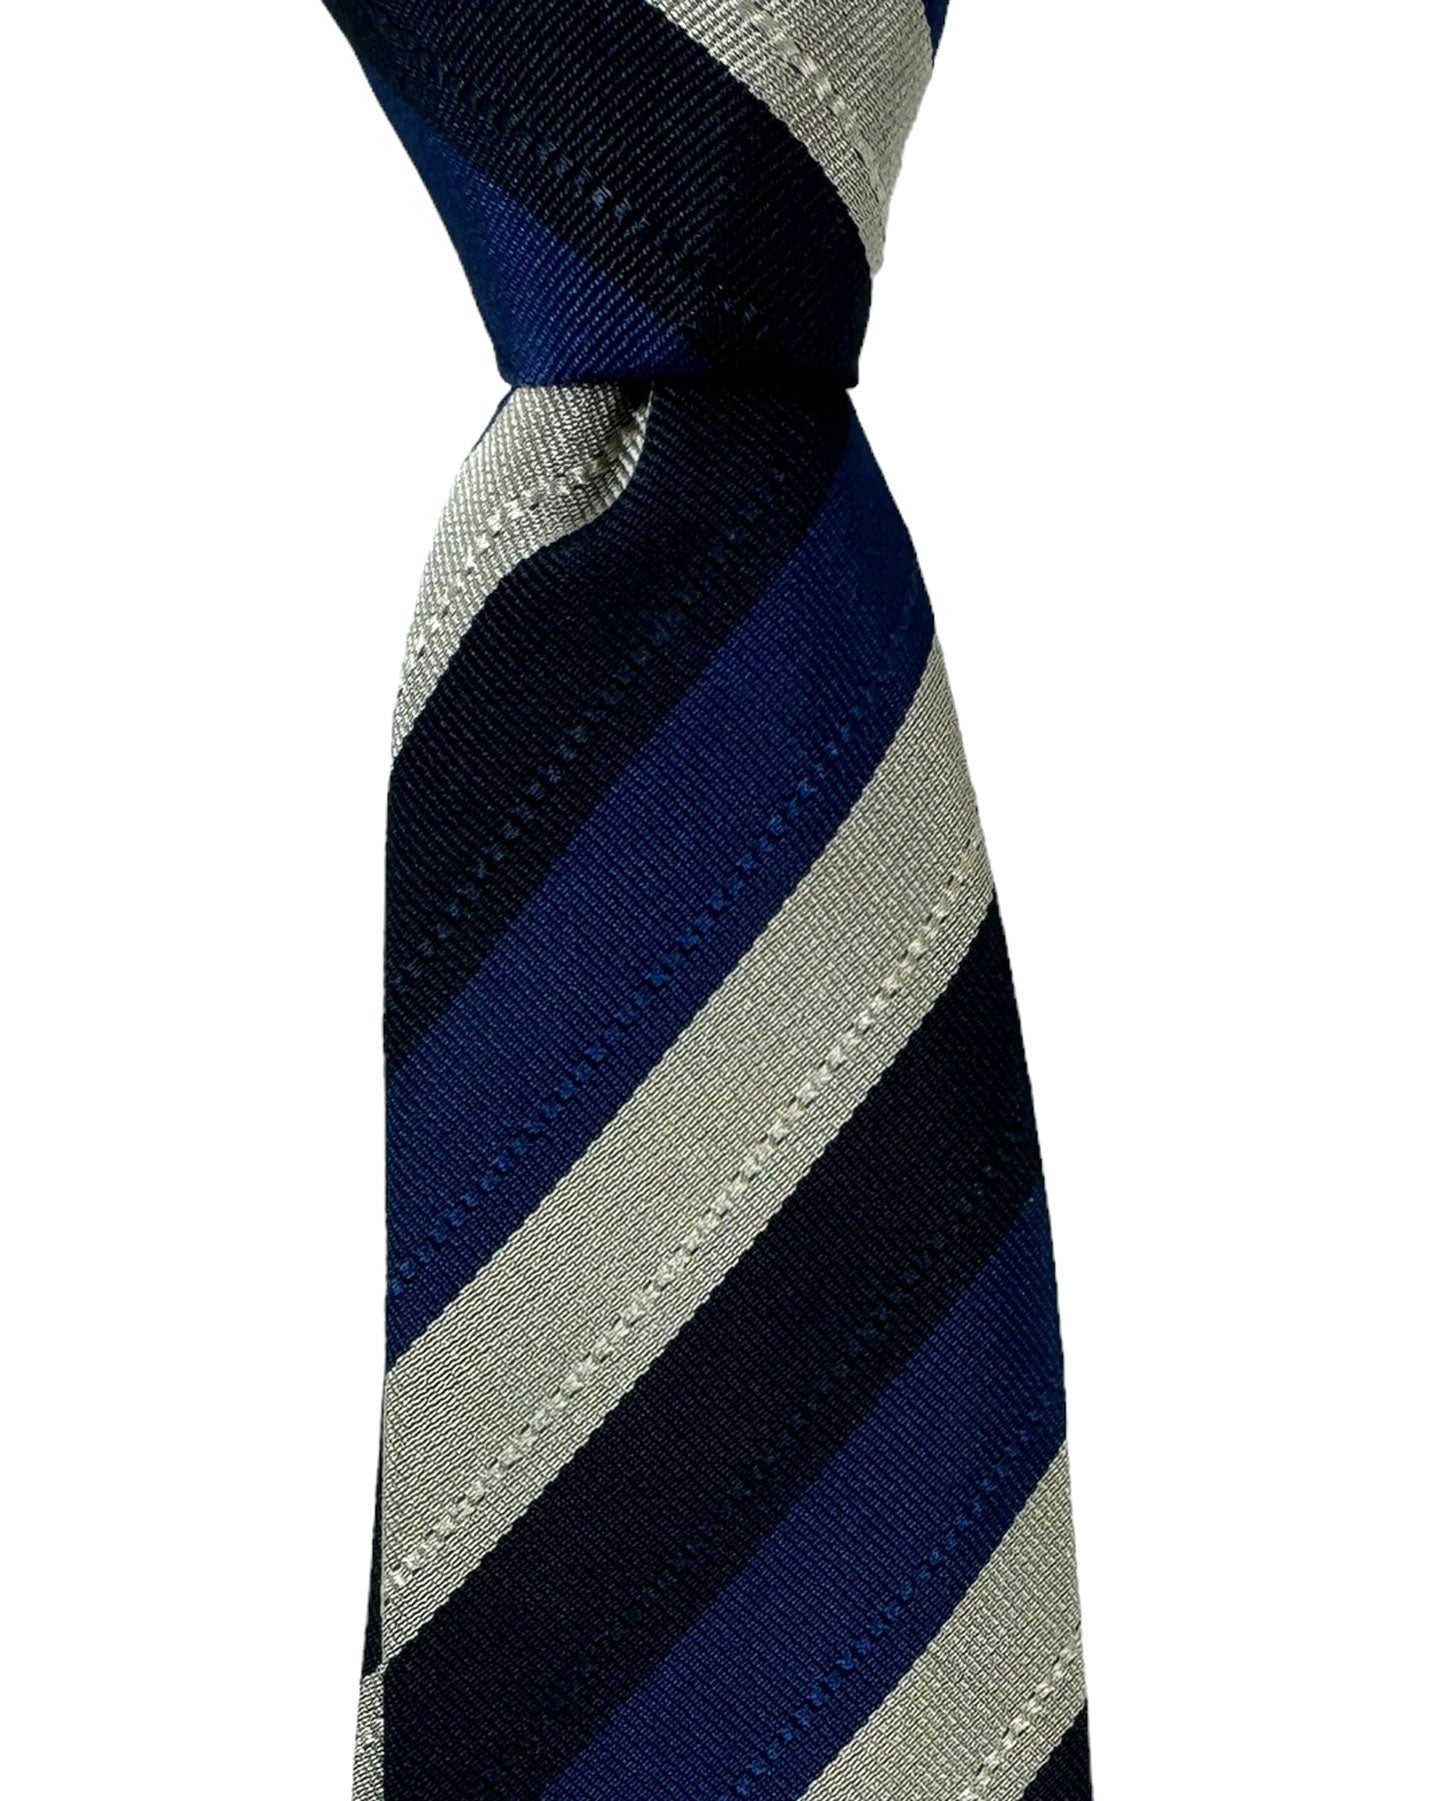 Moschino Tie Navy Royal Blue Gray Stripes Design 